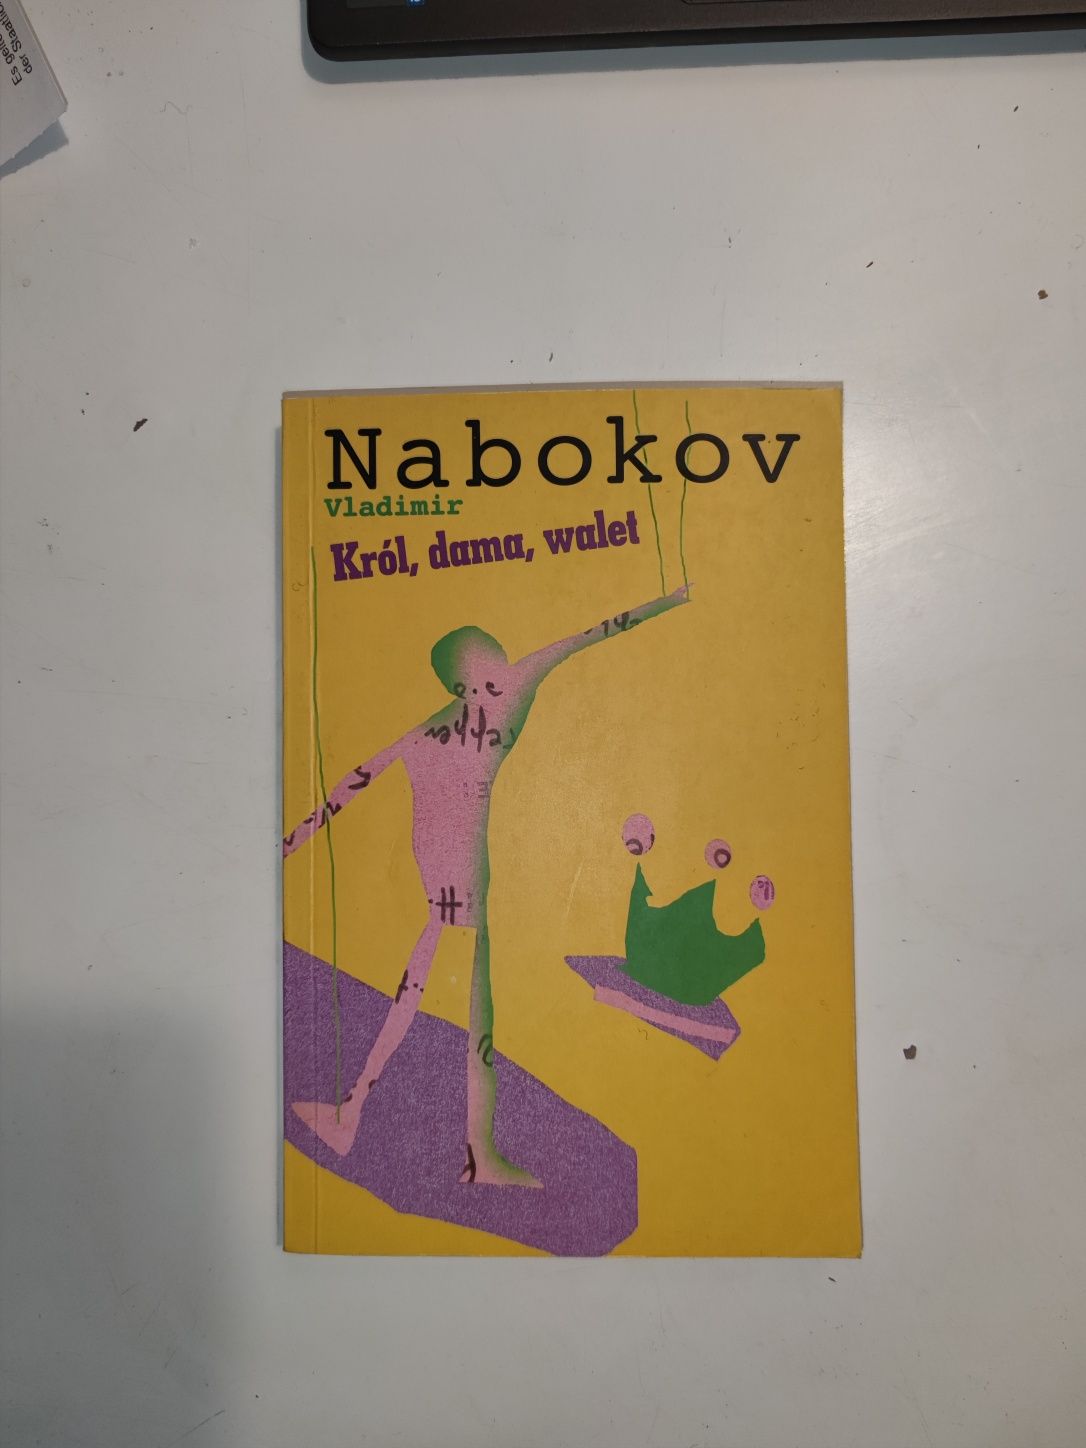 "Król, dama, walet" - Vladimir Nabokov